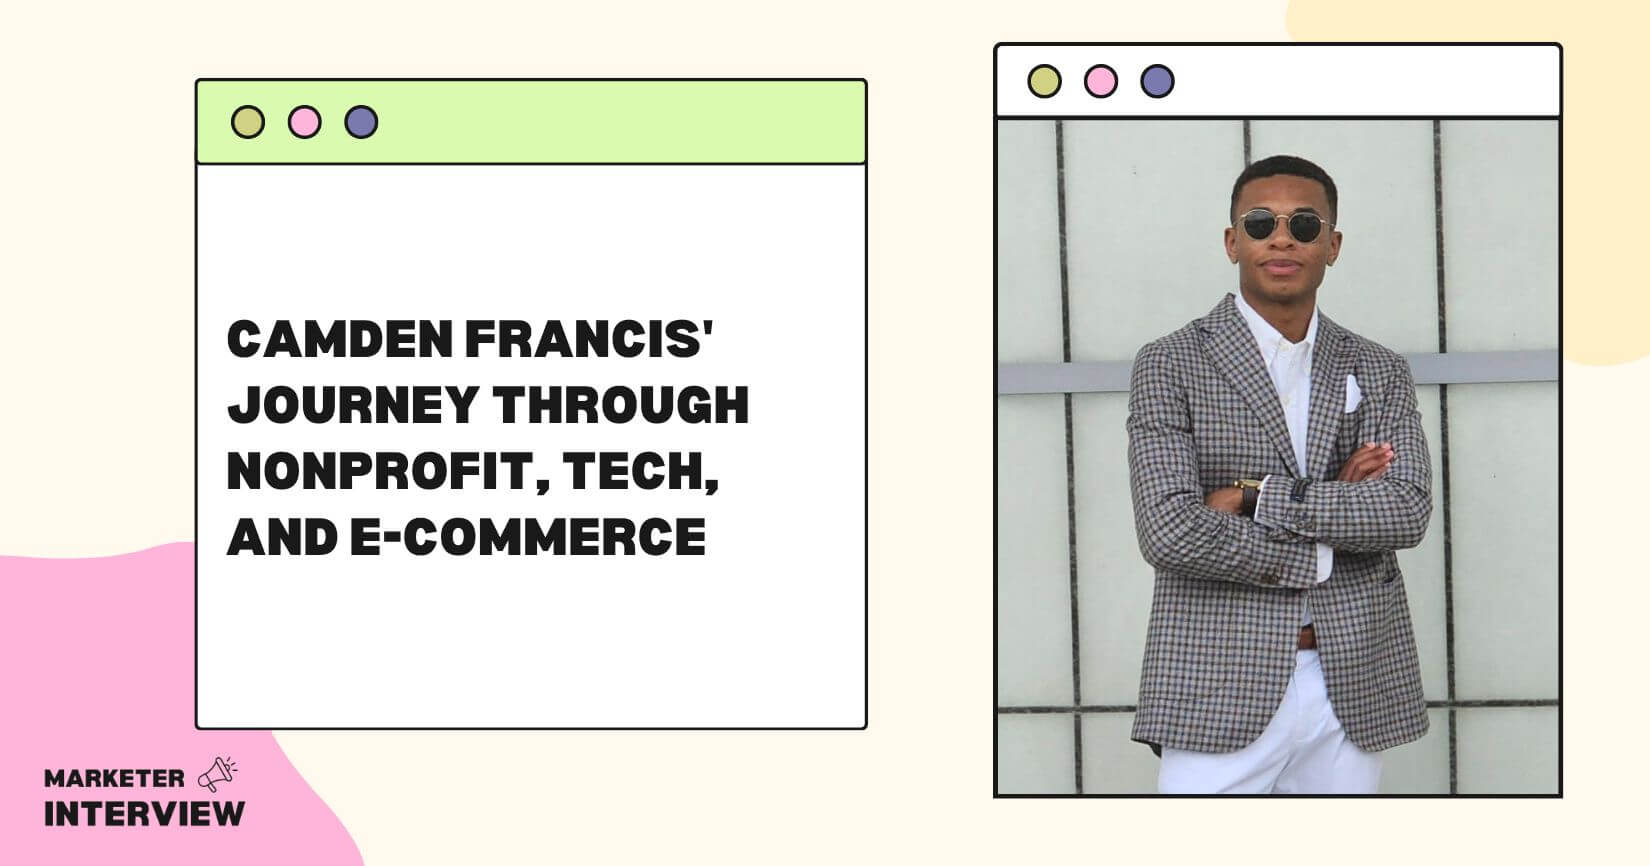 Camden Francis' Journey through Nonprofit, Tech, and E-Commerce